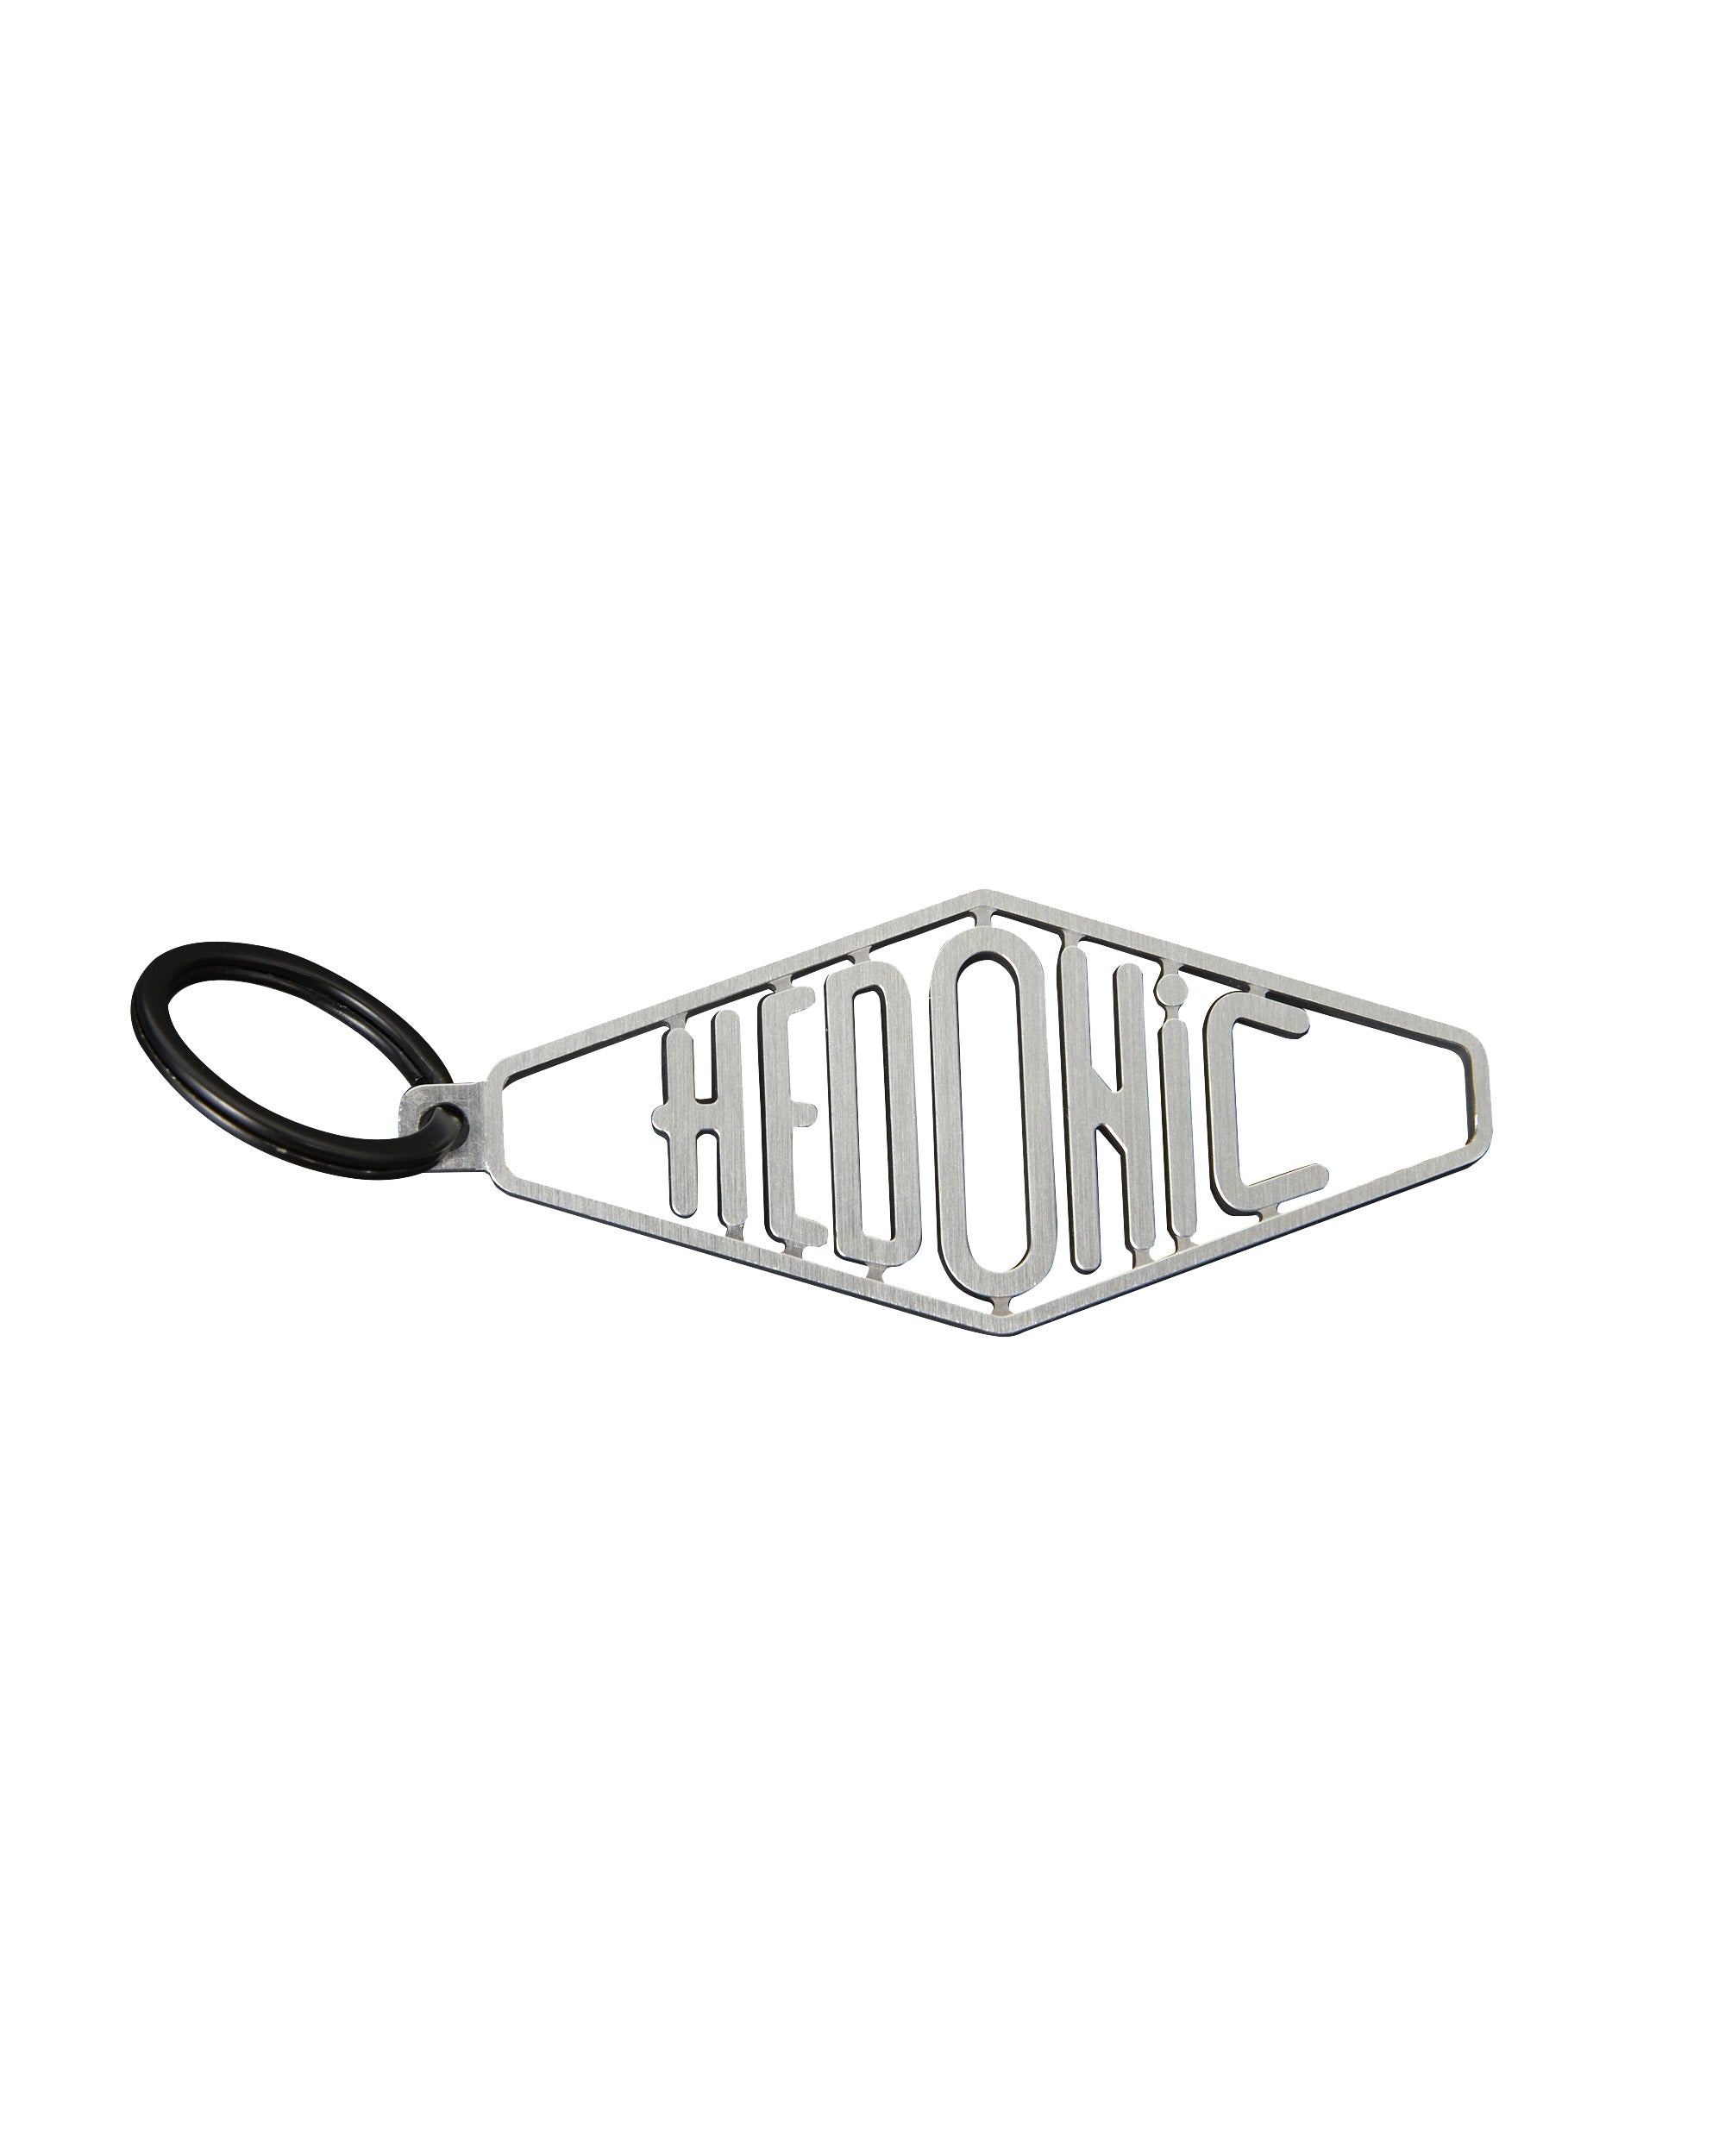 Aluminum key ring - Hedonic model